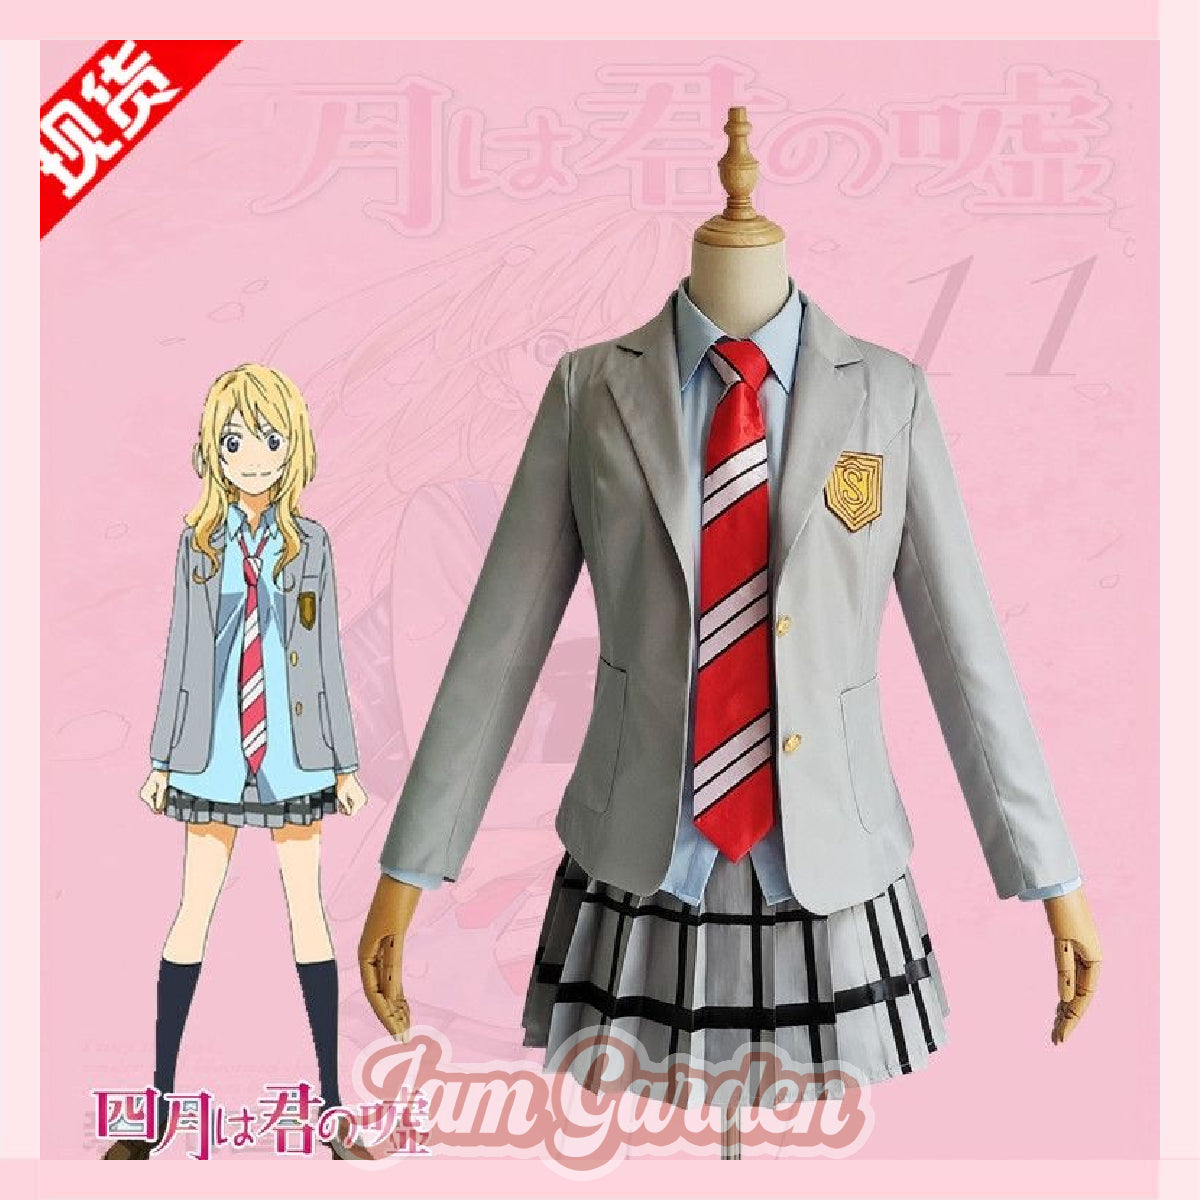 Your Lie in April Miyazono Kaori  cosplay Student uniform set